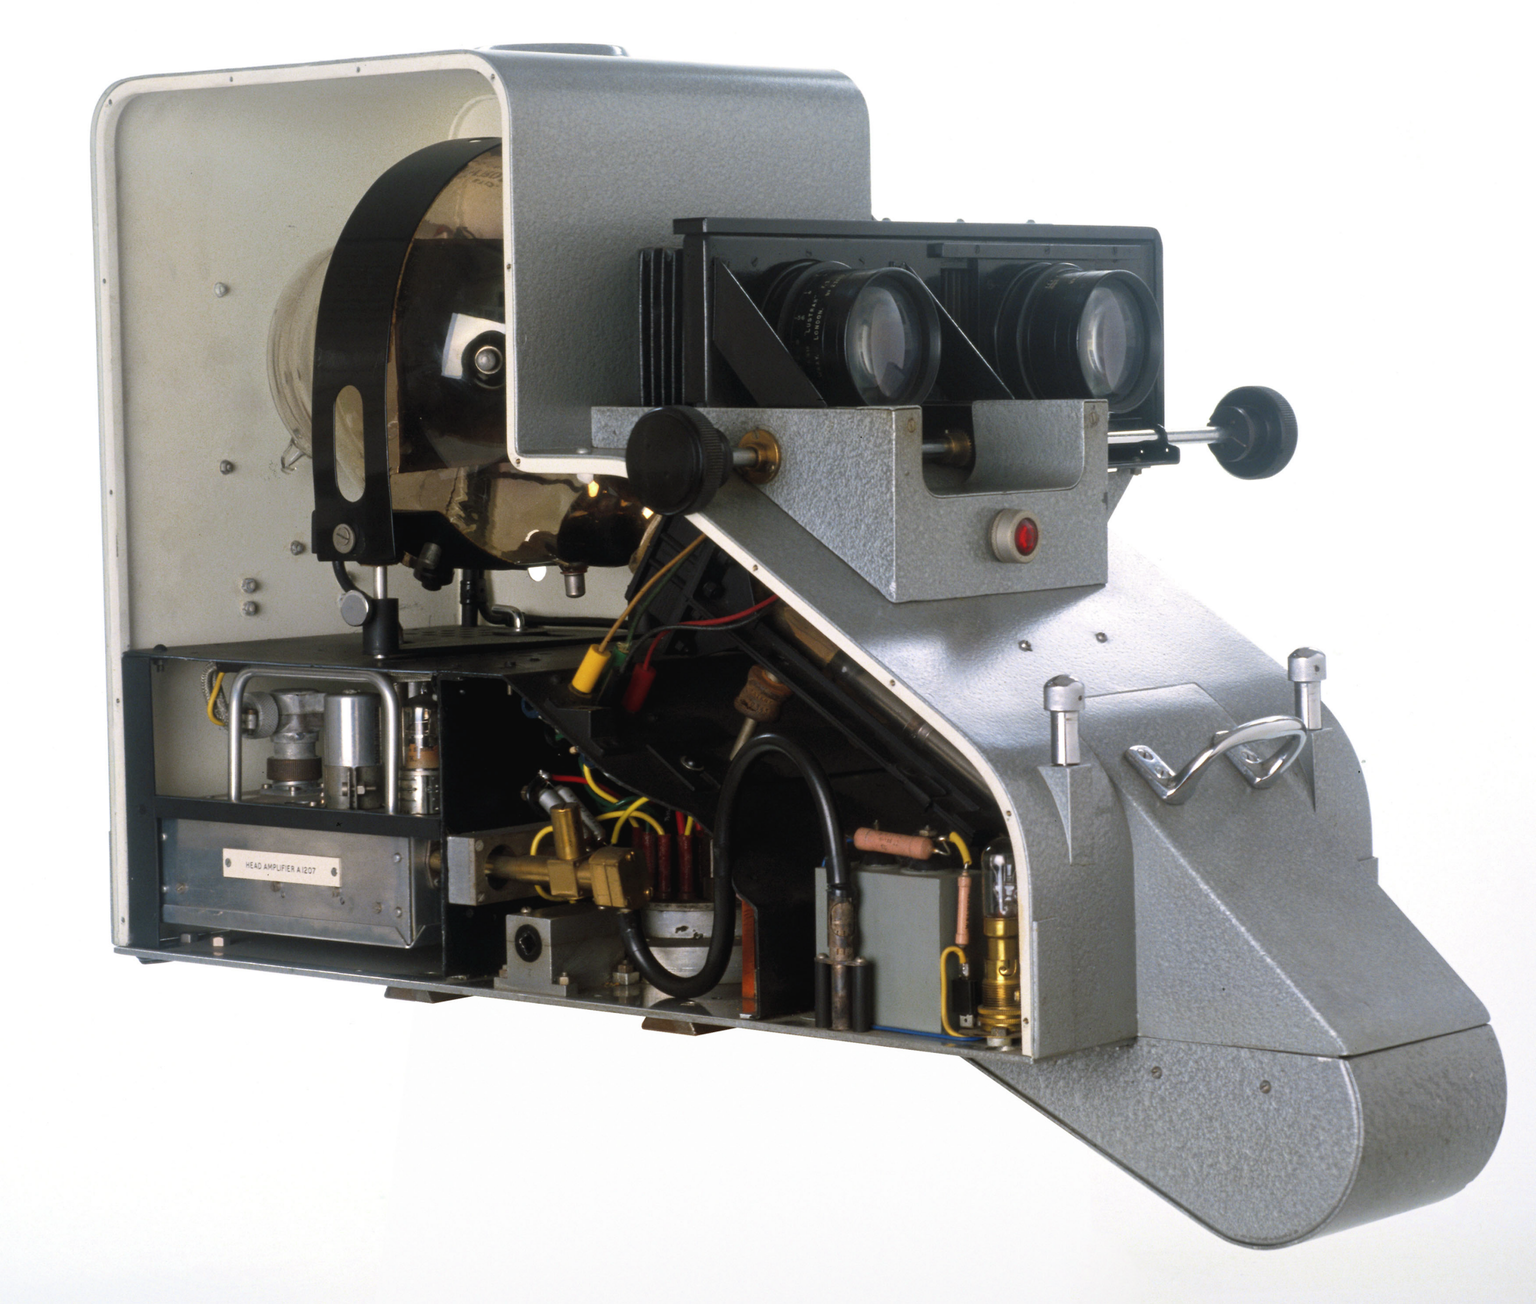 Cut-away display model of an EMI Emitron camera head